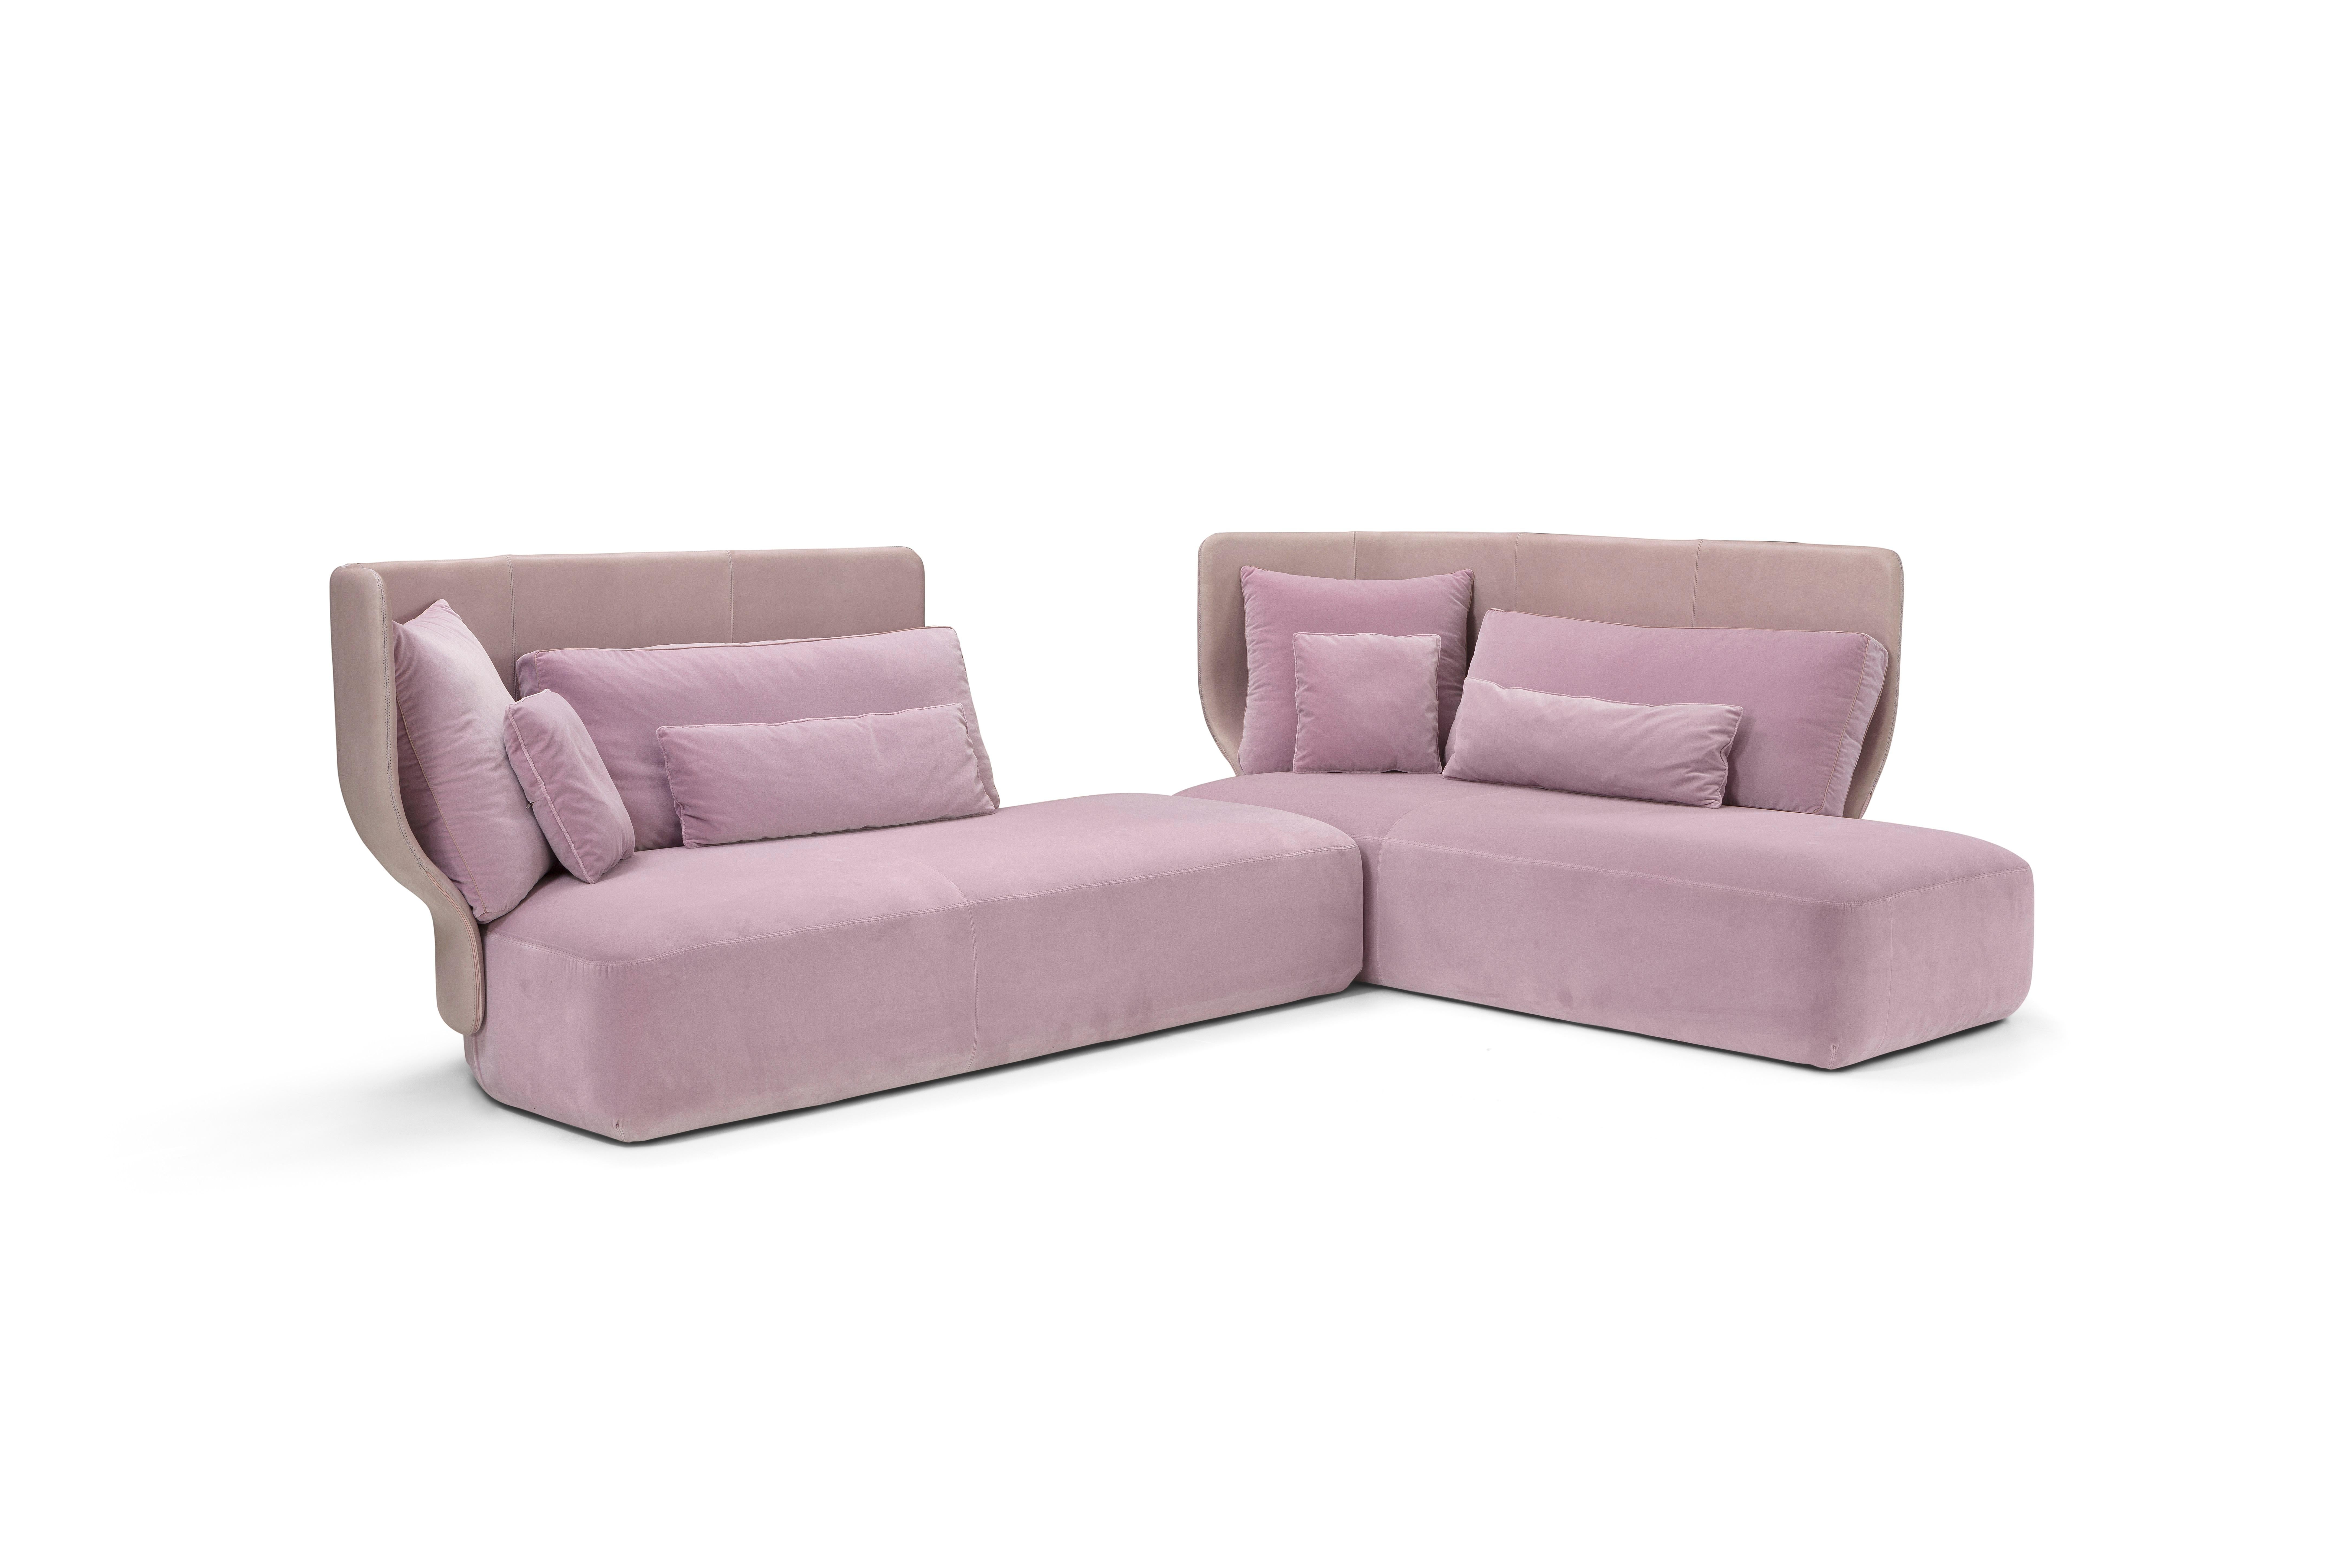 Modern Amura 'Wazaa' Sofa in Tan Leather and Blush Velvet by Stefano Bigi For Sale